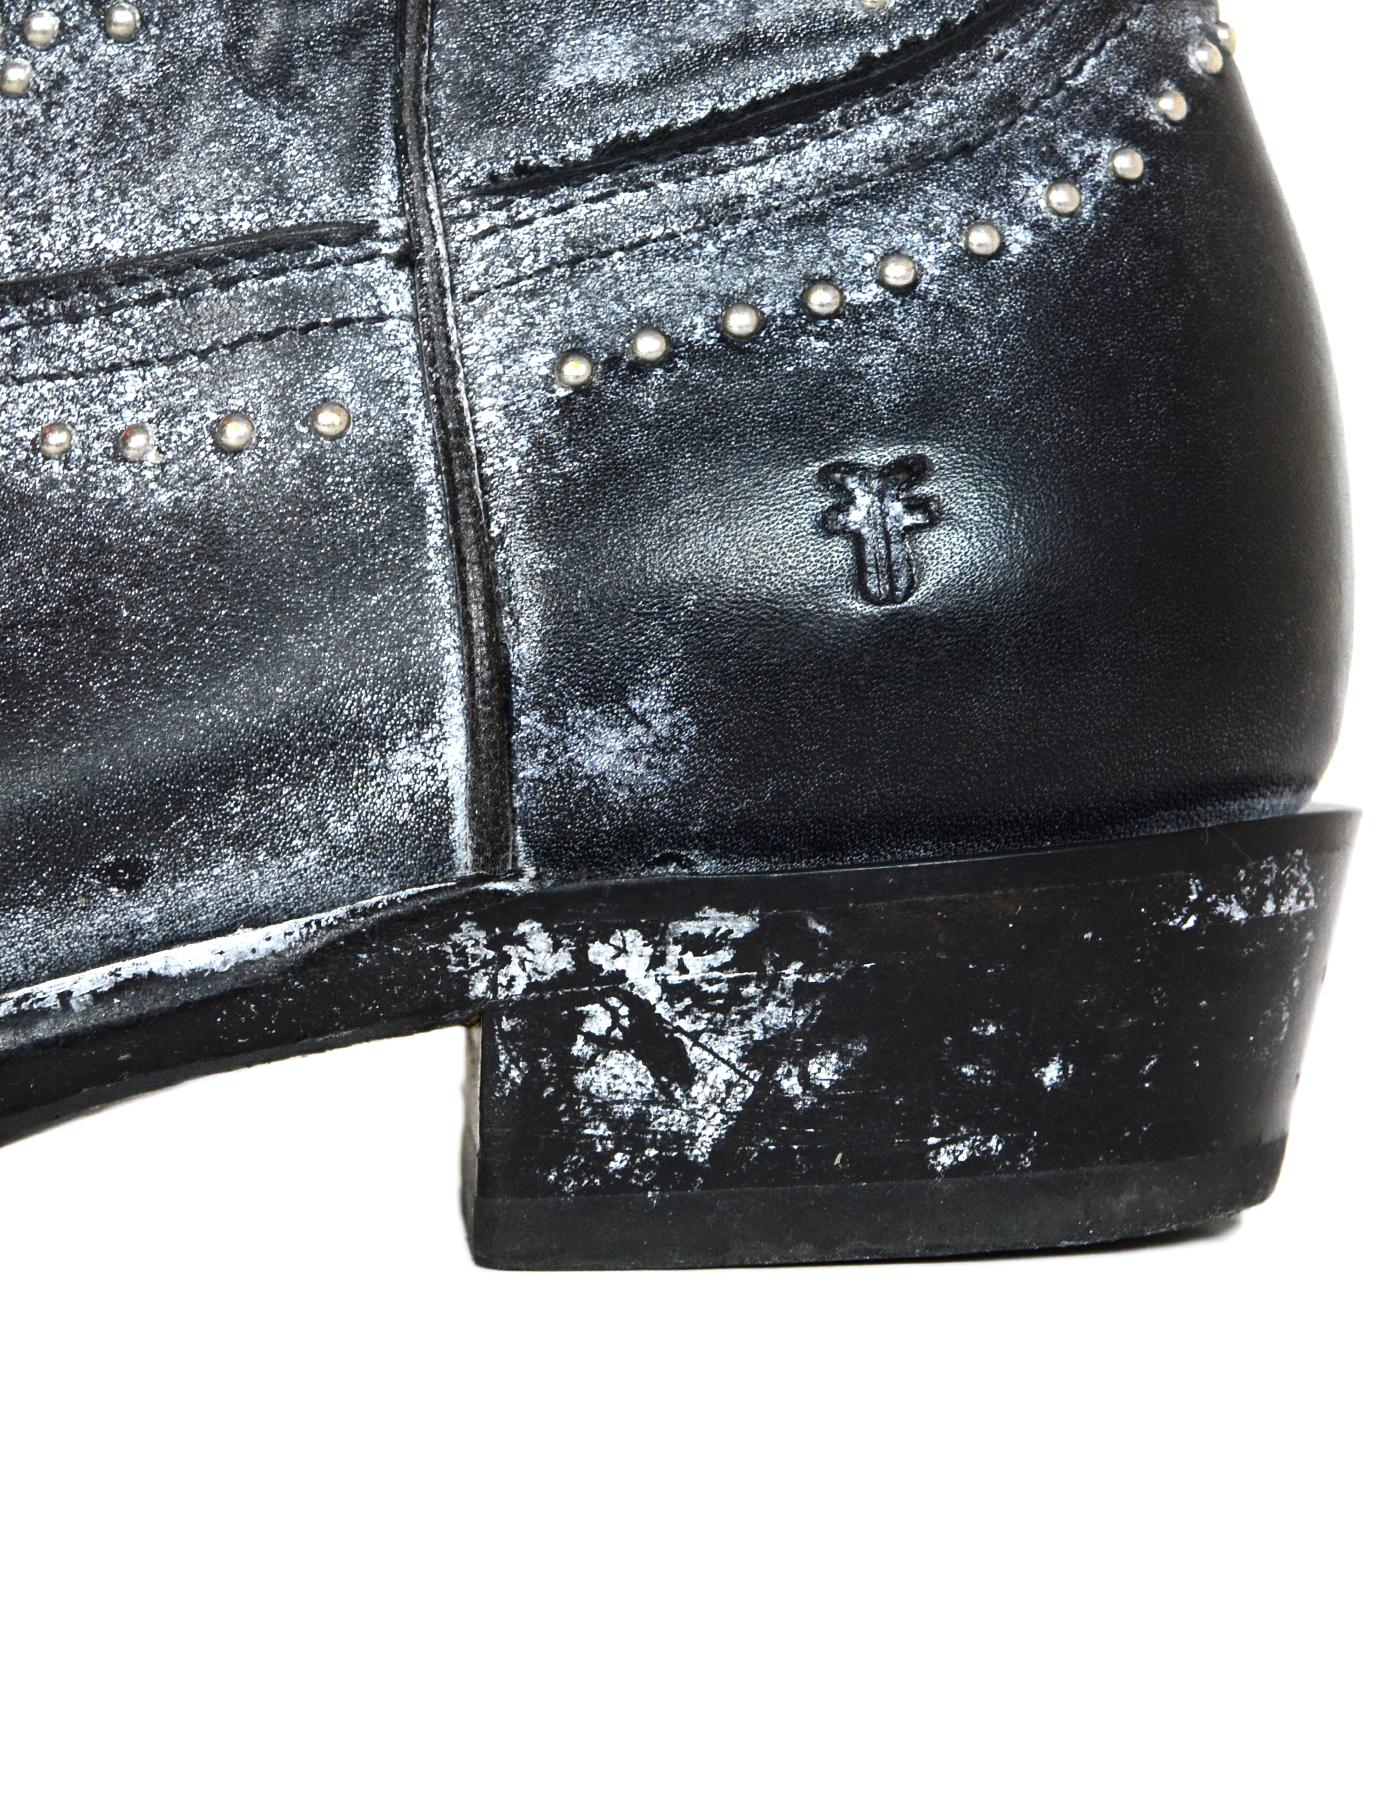 Women's Frye Black Leather Billy Studded Short Boots Sz 5.5